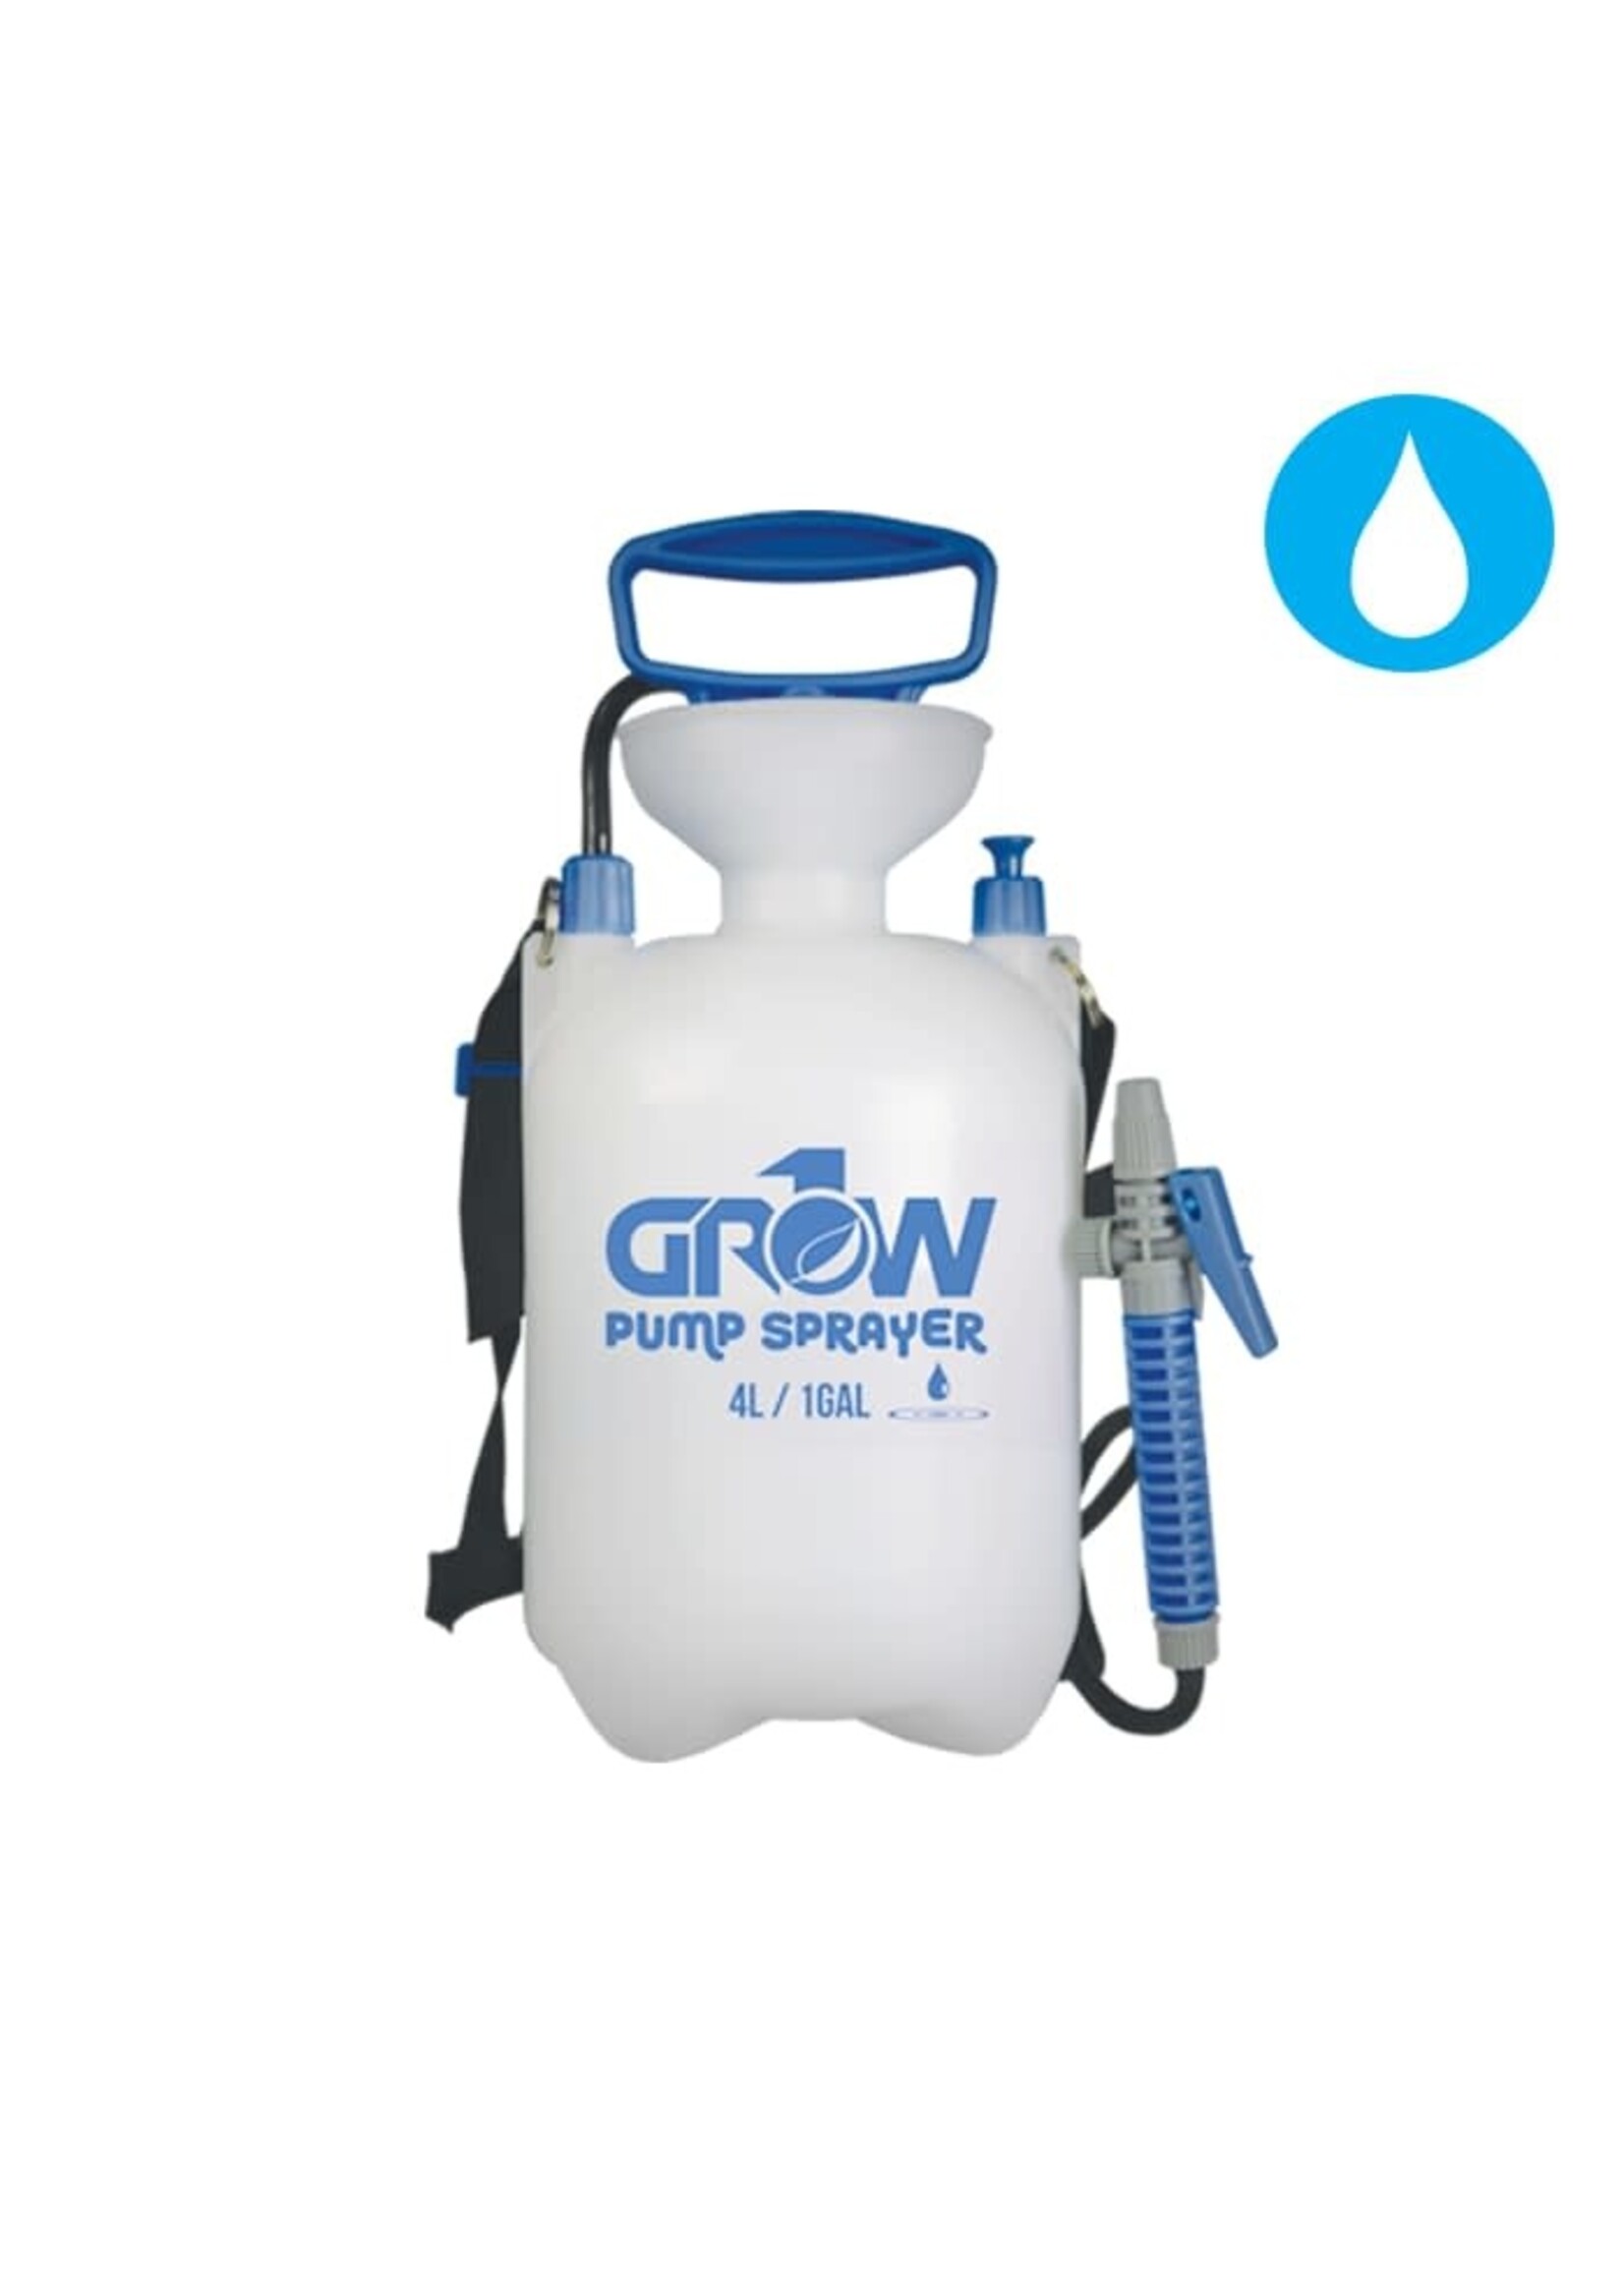 Grow1 Grow1 (4L/1Gal) Pump Sprayer